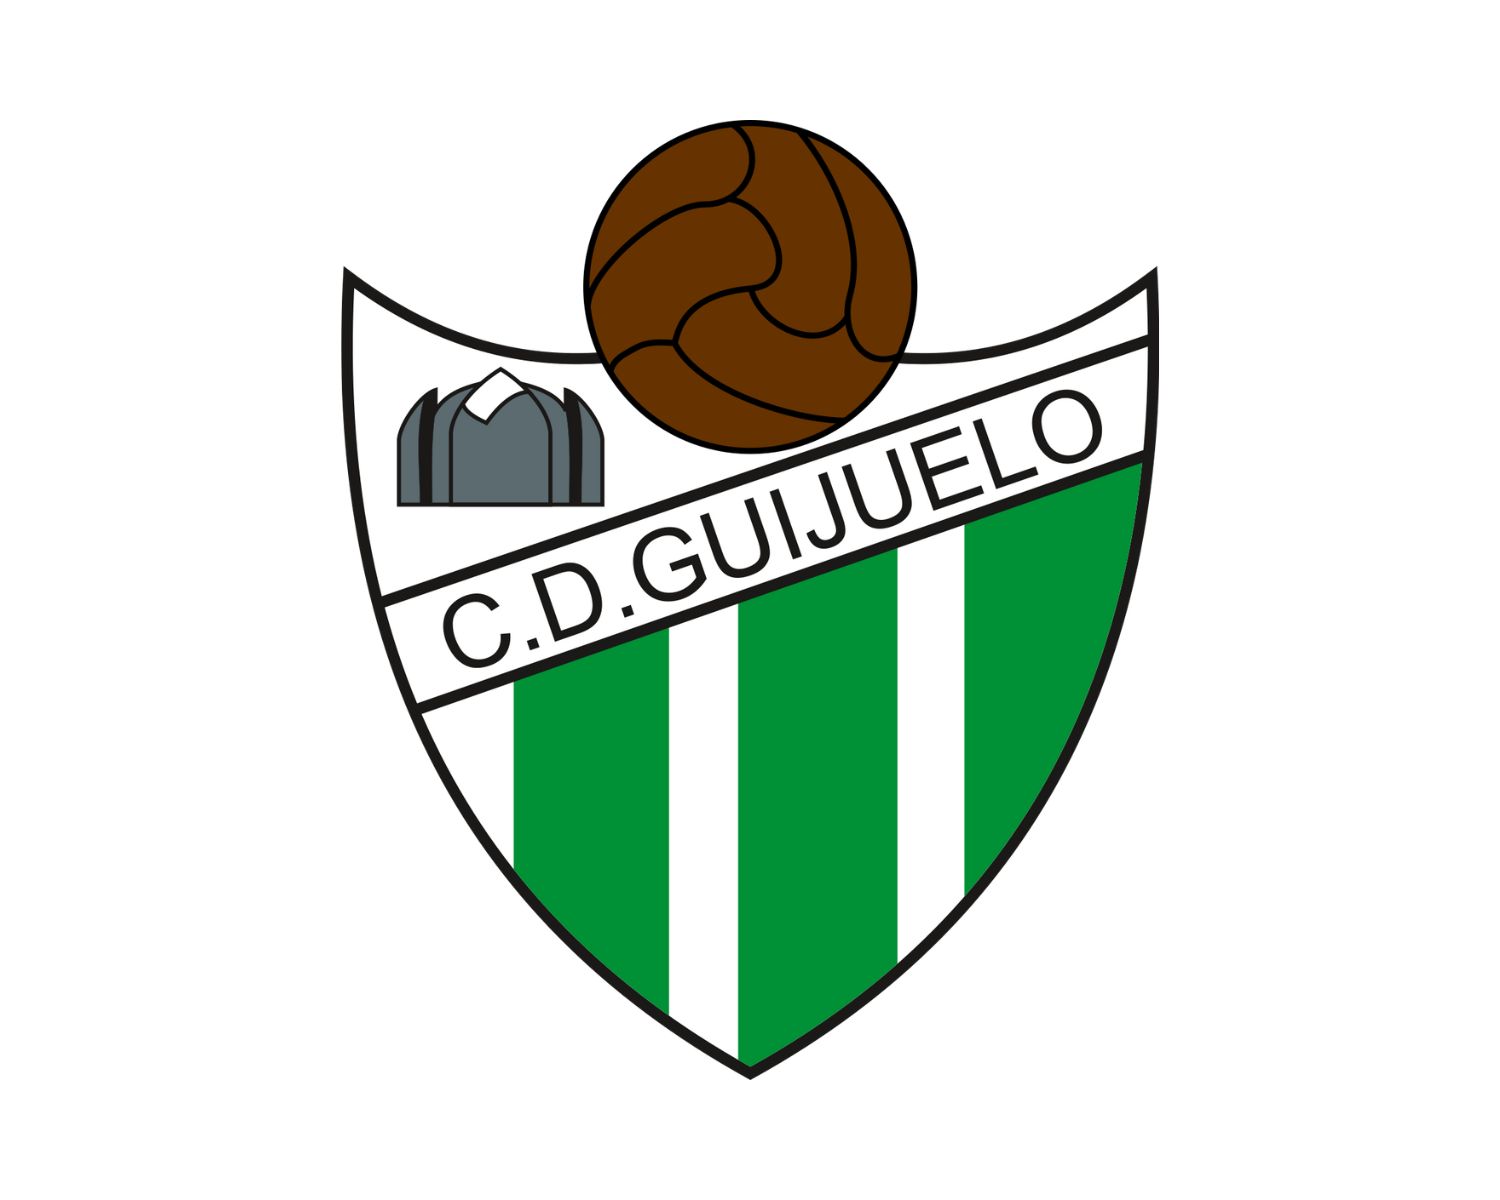 cd-guijuelo-10-football-club-facts